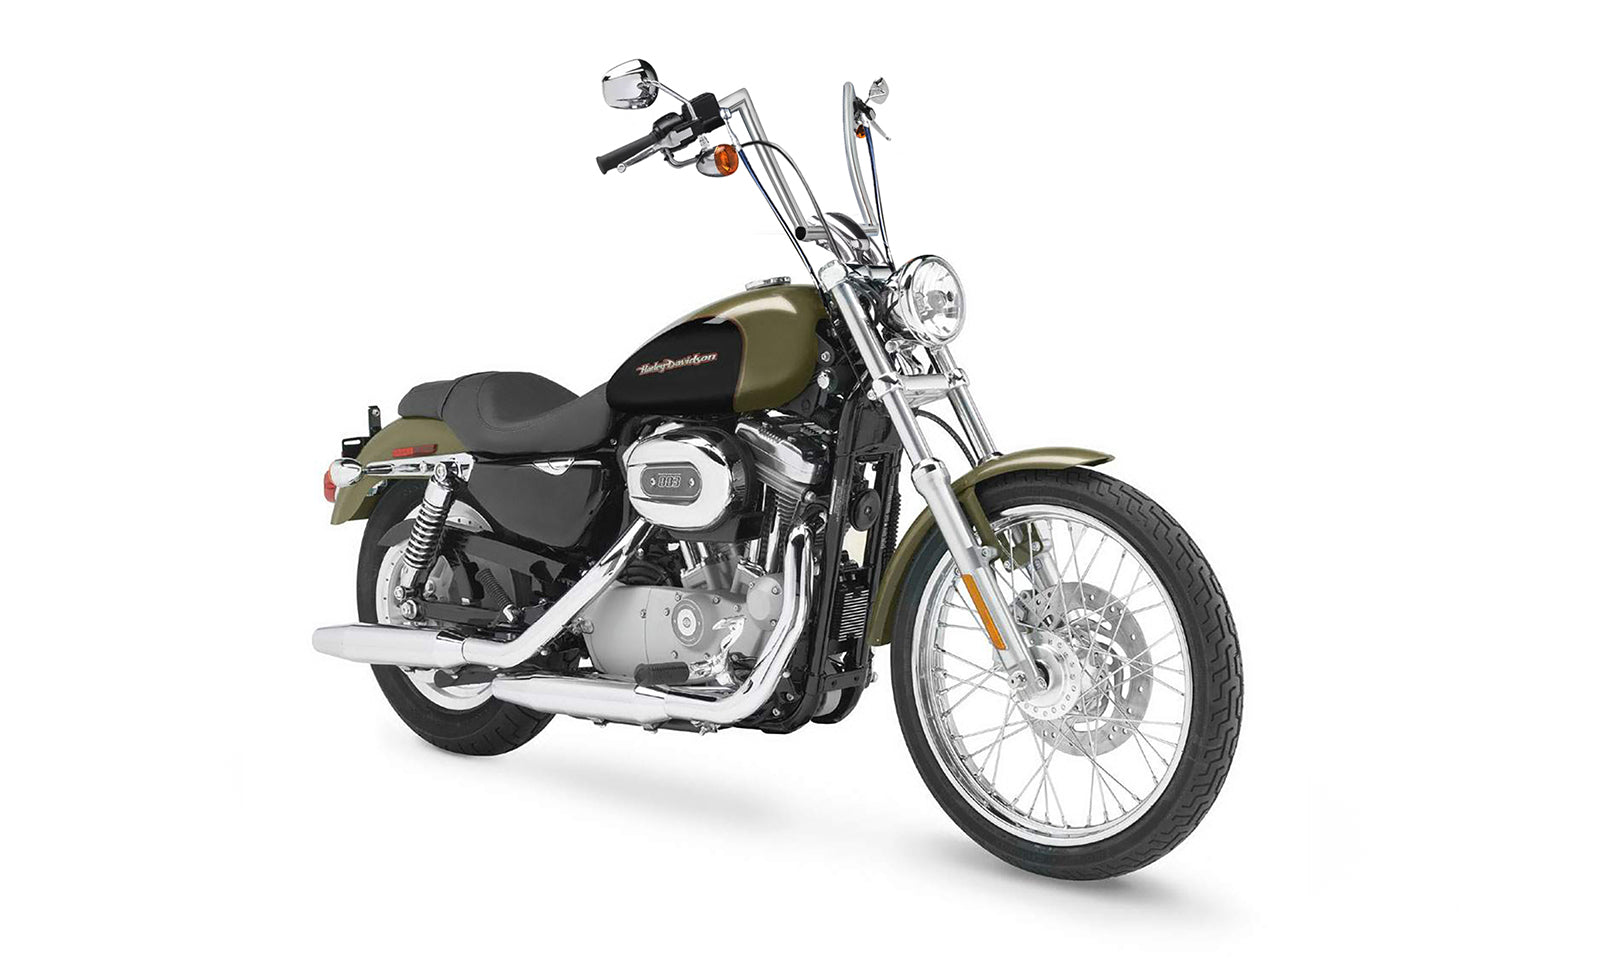 Viking Iron Born 9" Handlebar for Harley Sportster 883 Custom XL883C Chrome Bag on Bike View @expand